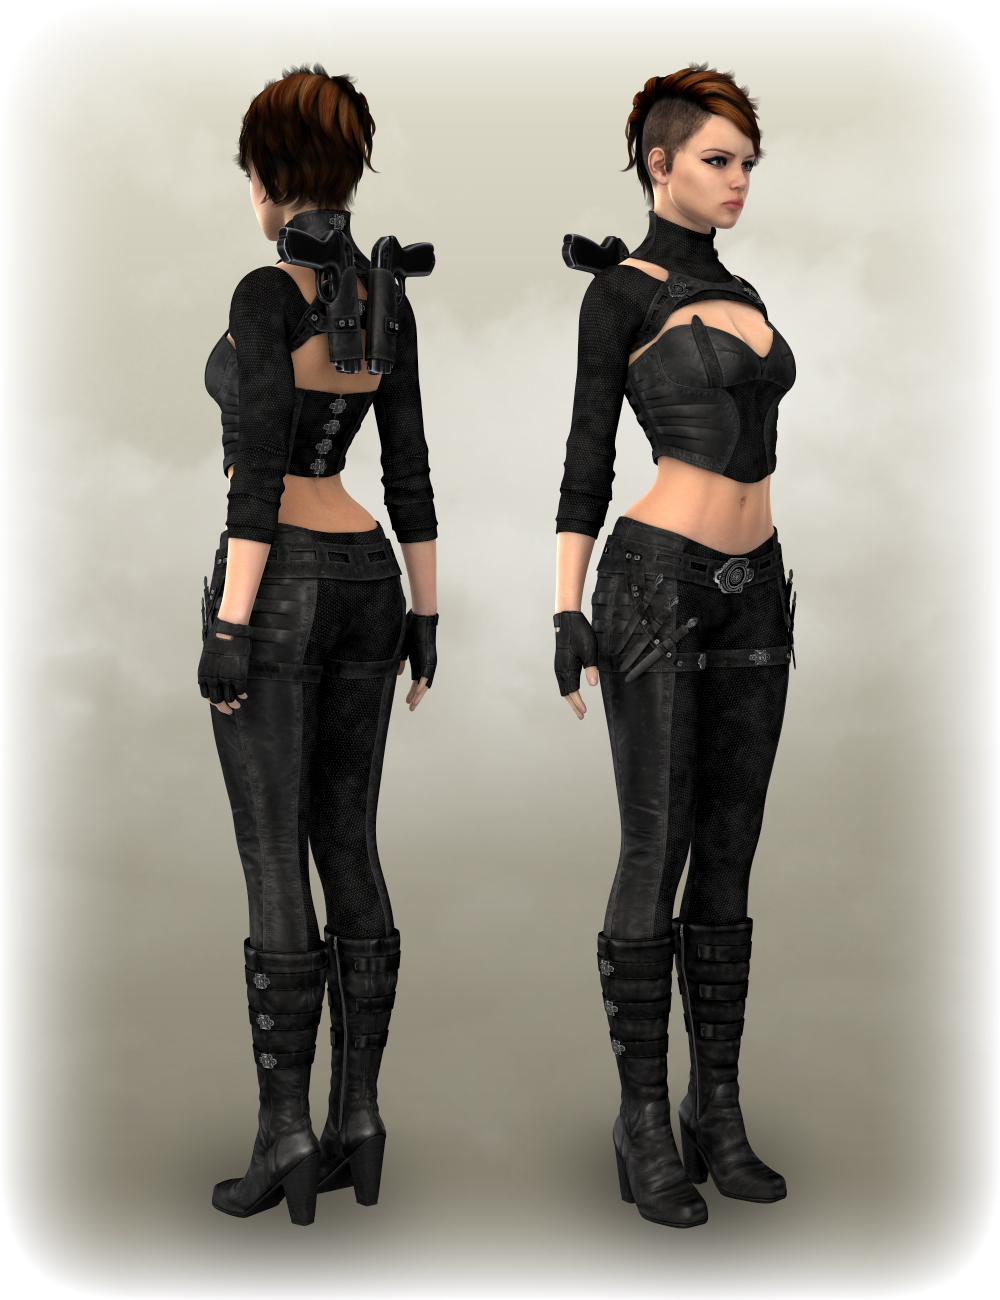 AERON for Genesis 2 Female(s) | Daz 3D